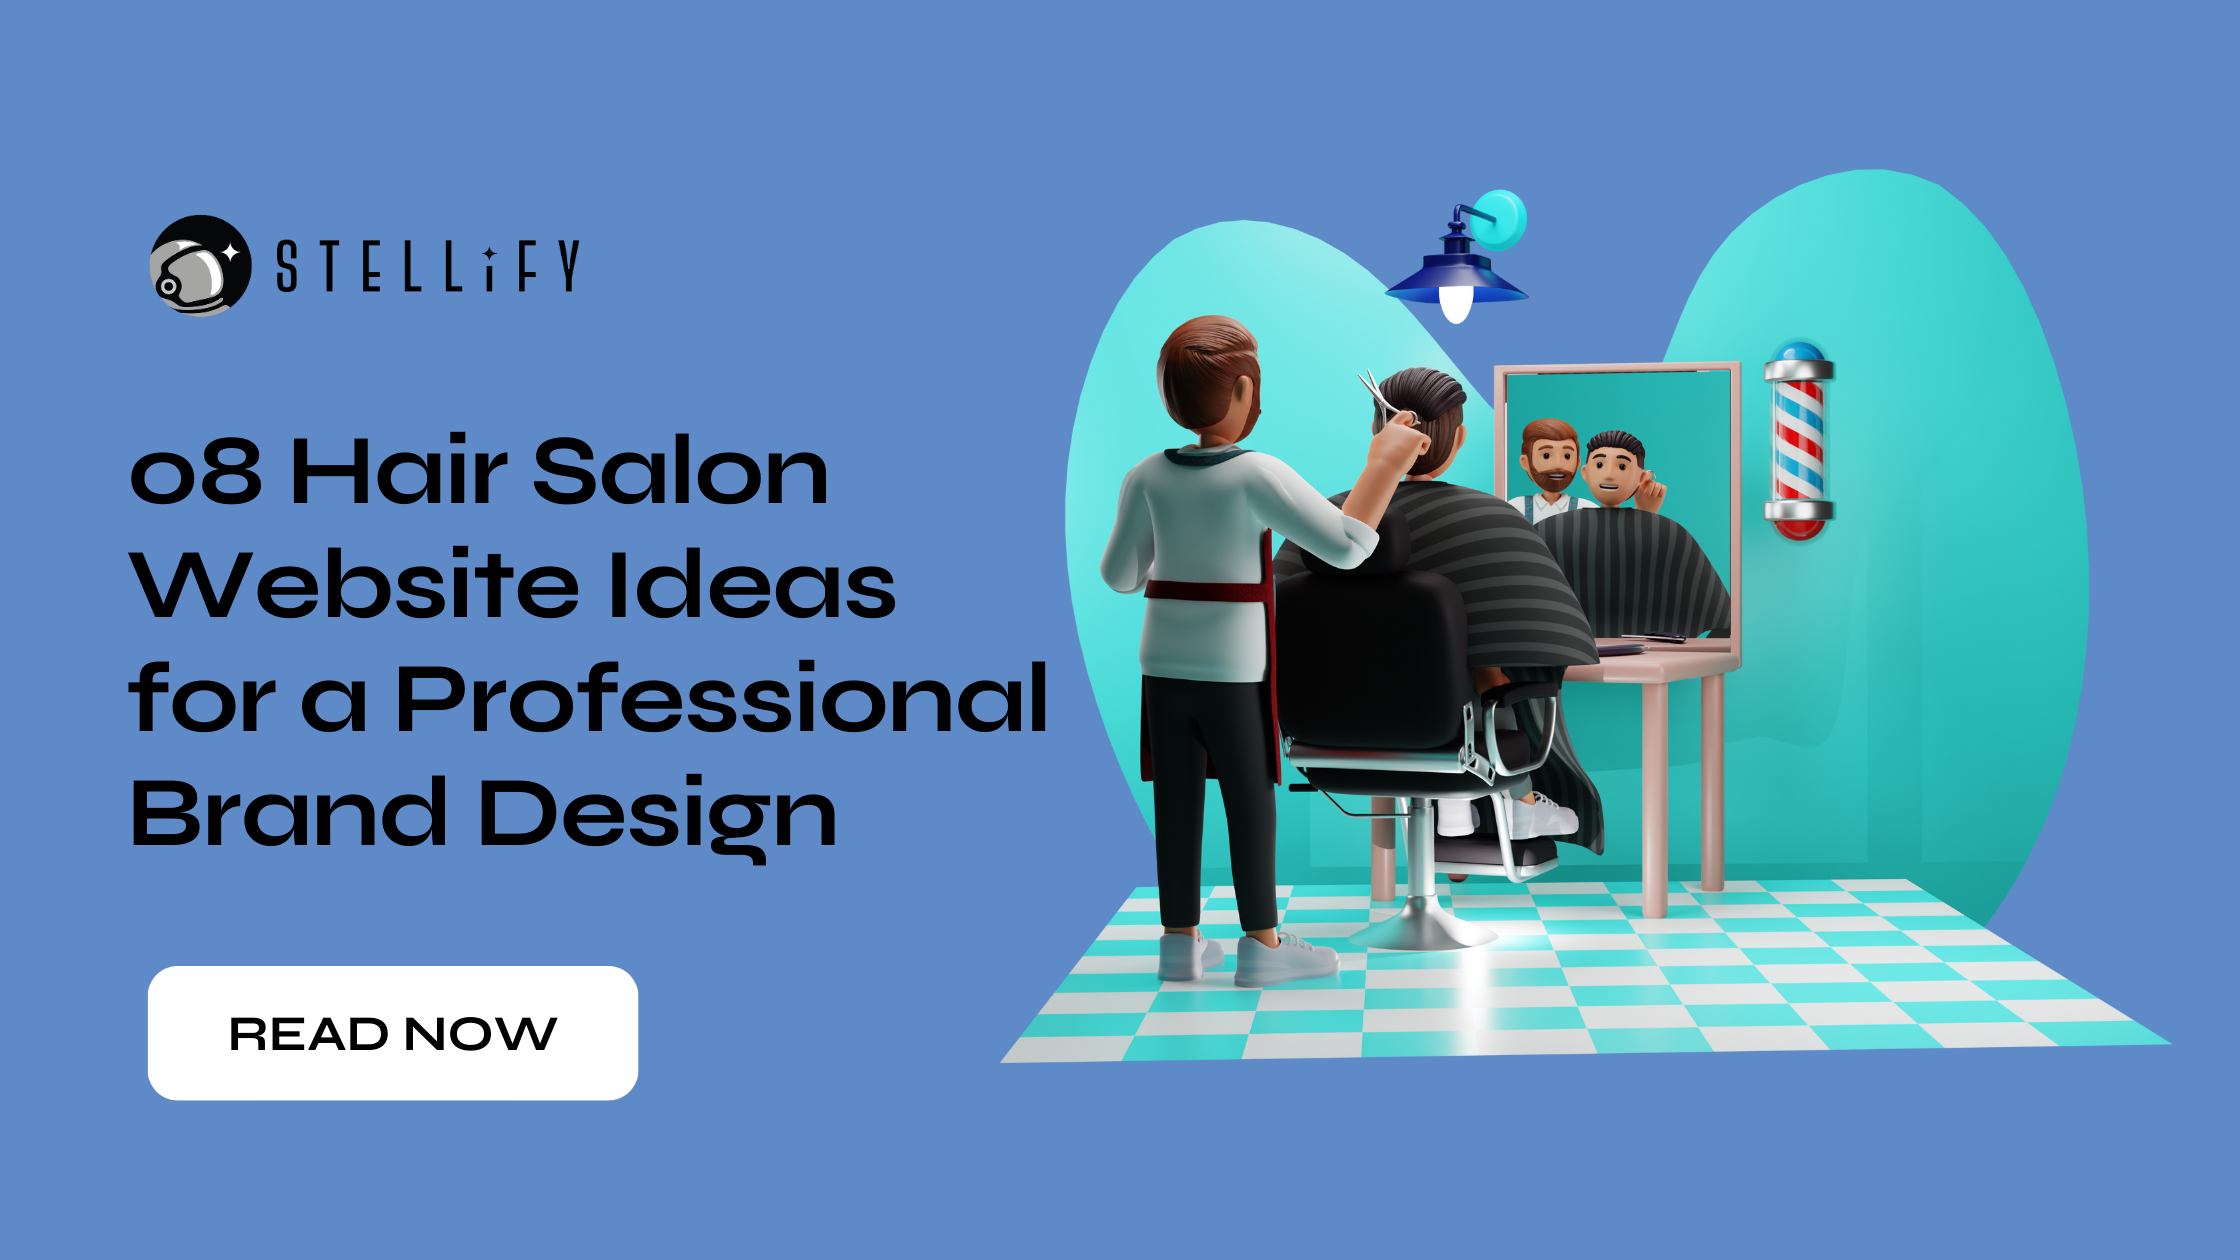 10 Hair Salon Website Ideas for a Professional Brand Design